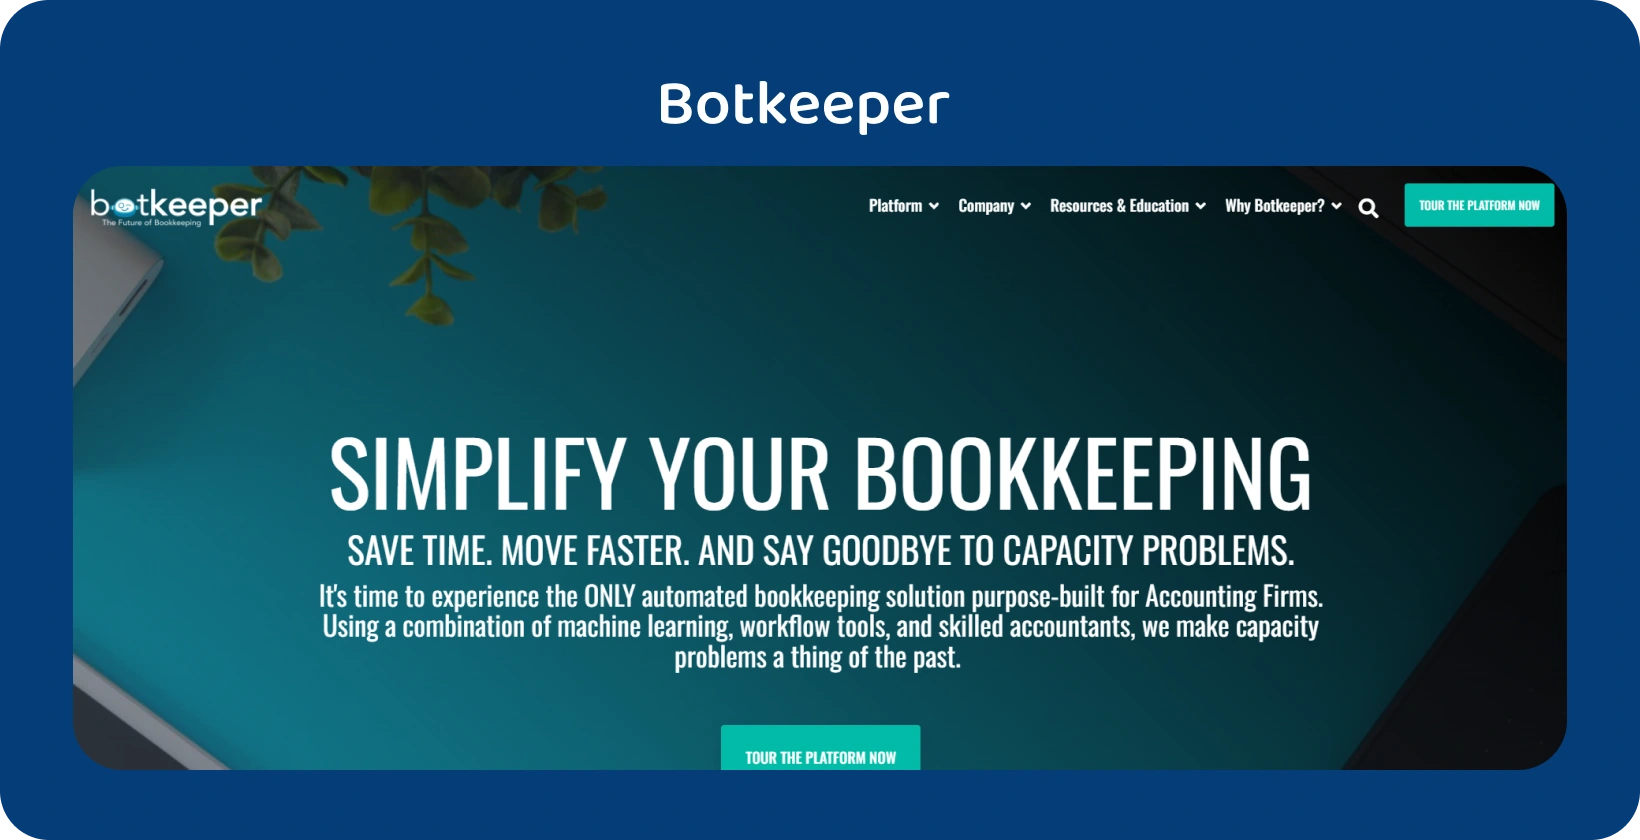 Botkeeper 的主页突出了通过其自动化技术简化会计师簿记的功能。